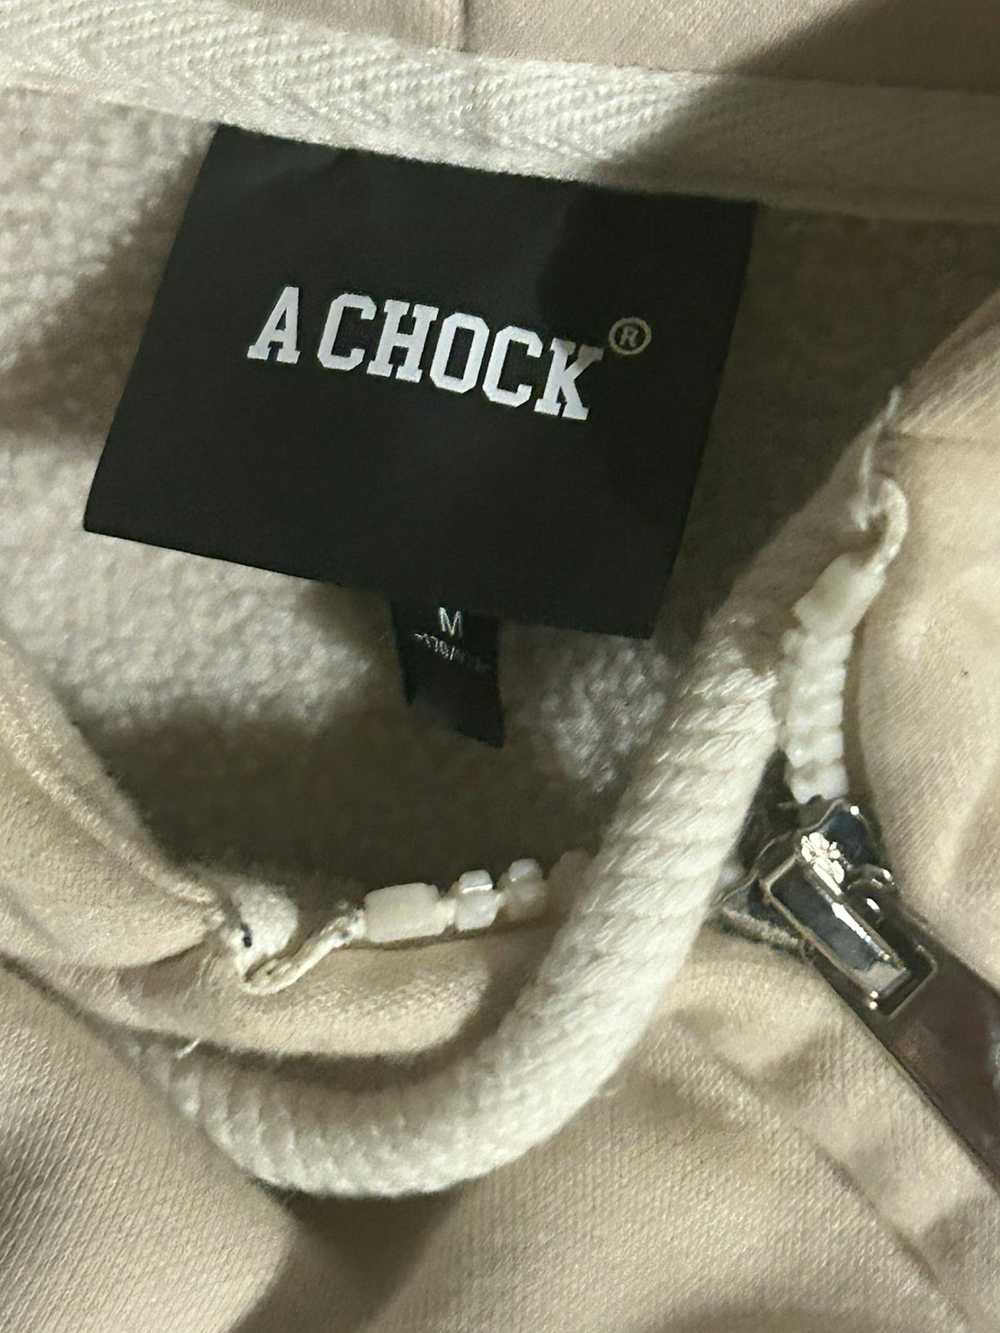 Other × Rare × Streetwear A Chock Zip Up Random Z… - image 3